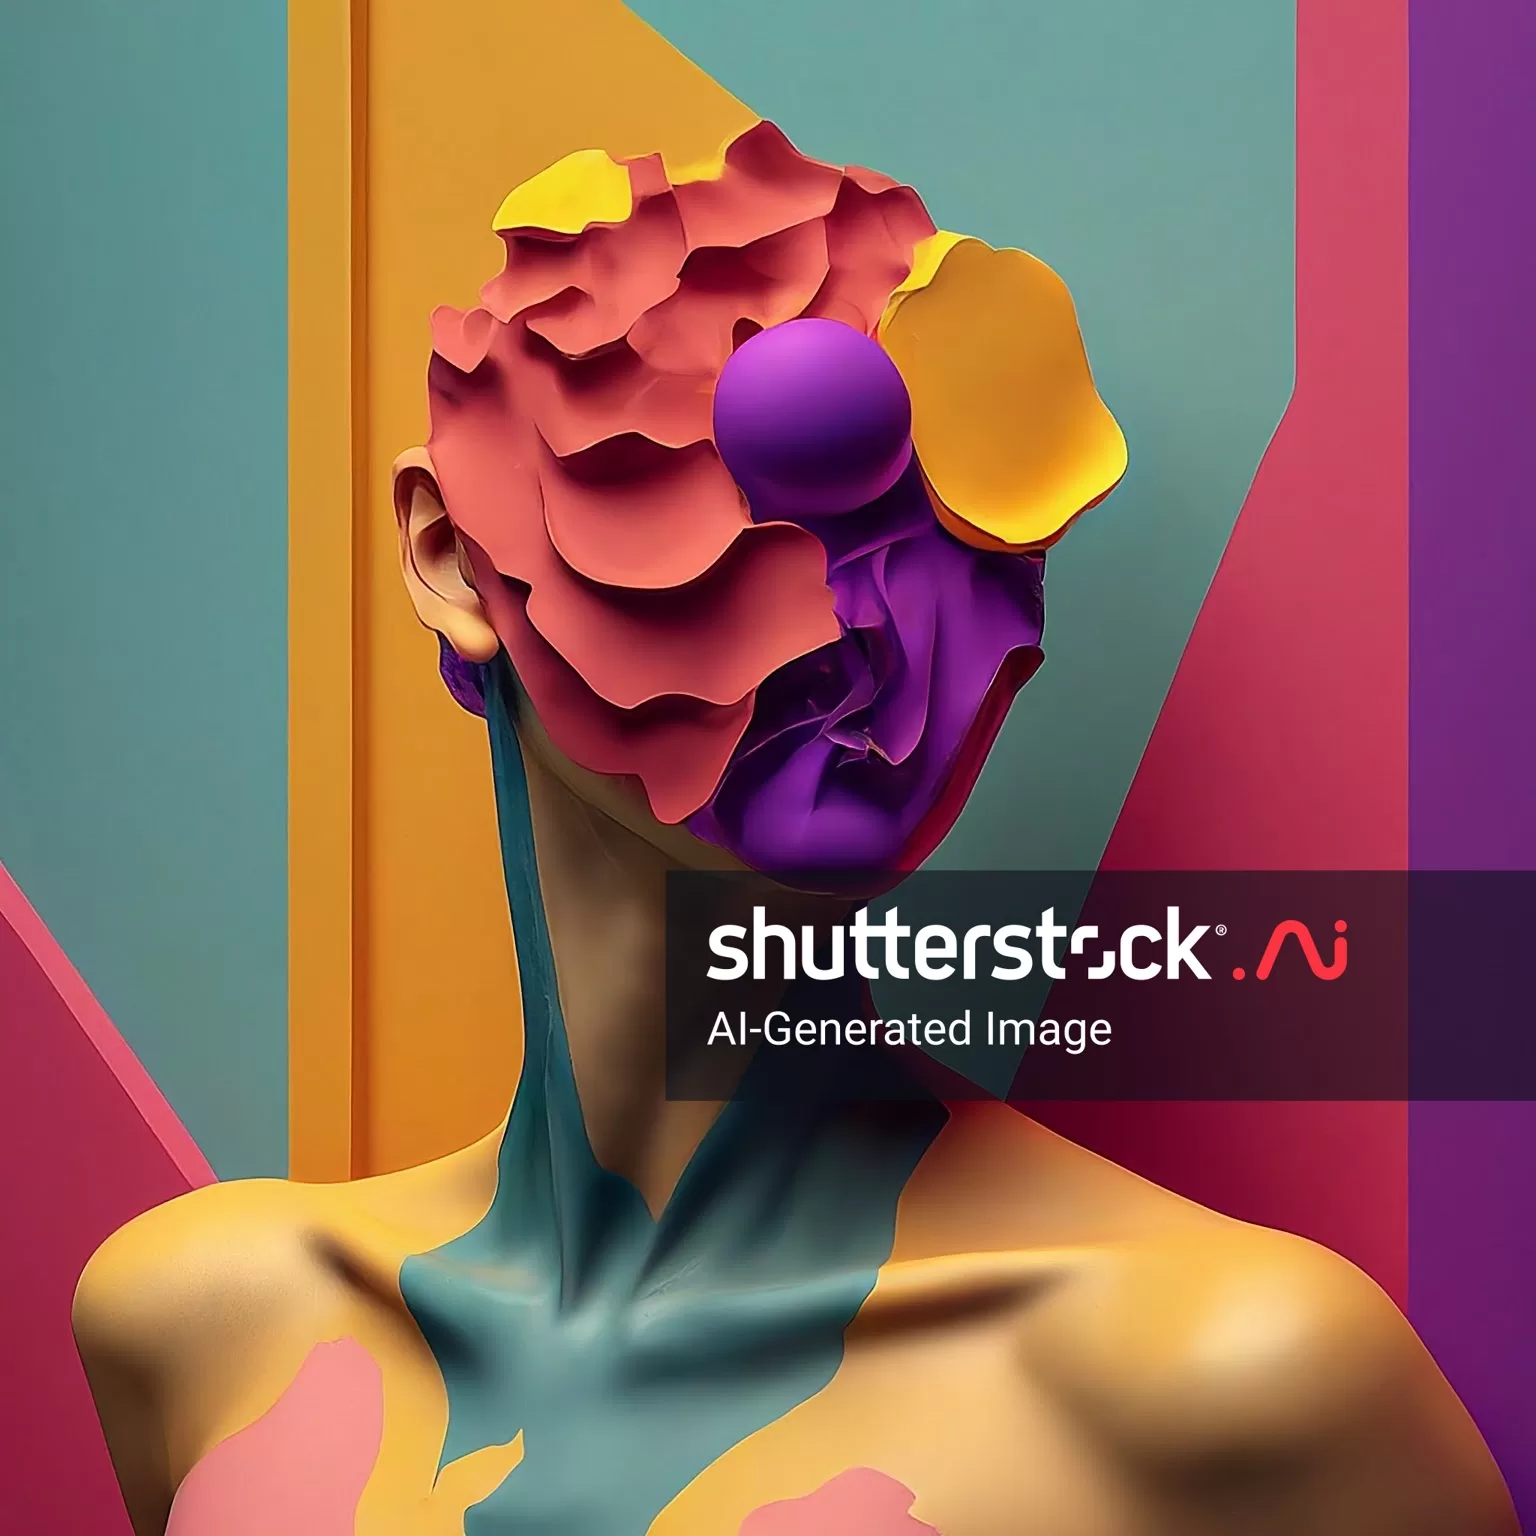 IA do Shutterstock